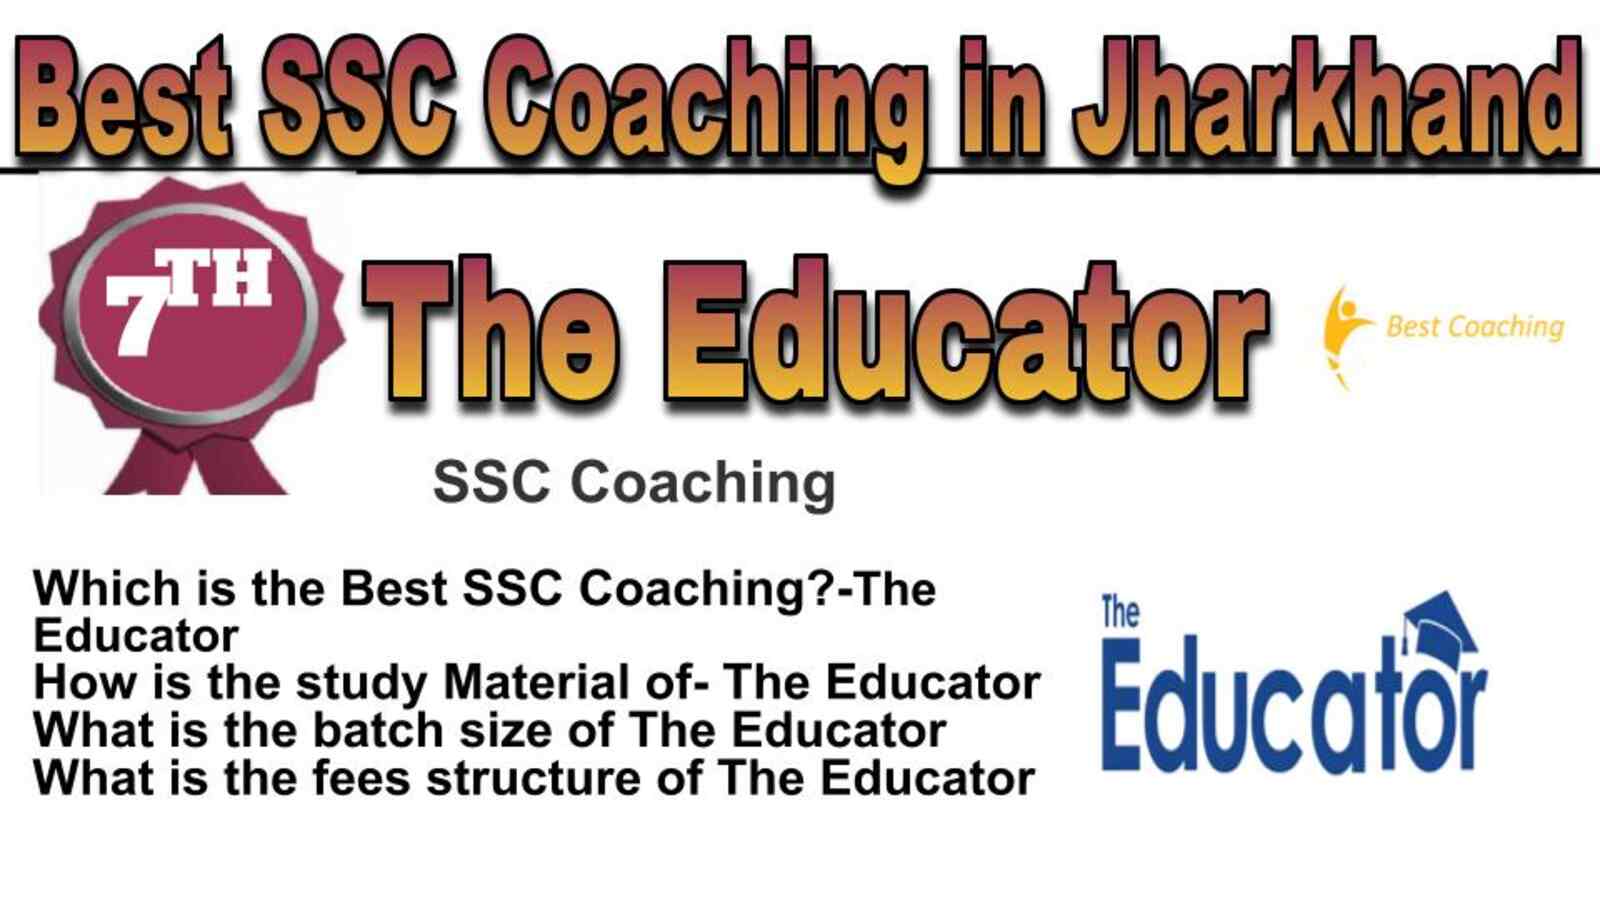 Rank 7 best SSC coaching in Jharkhand